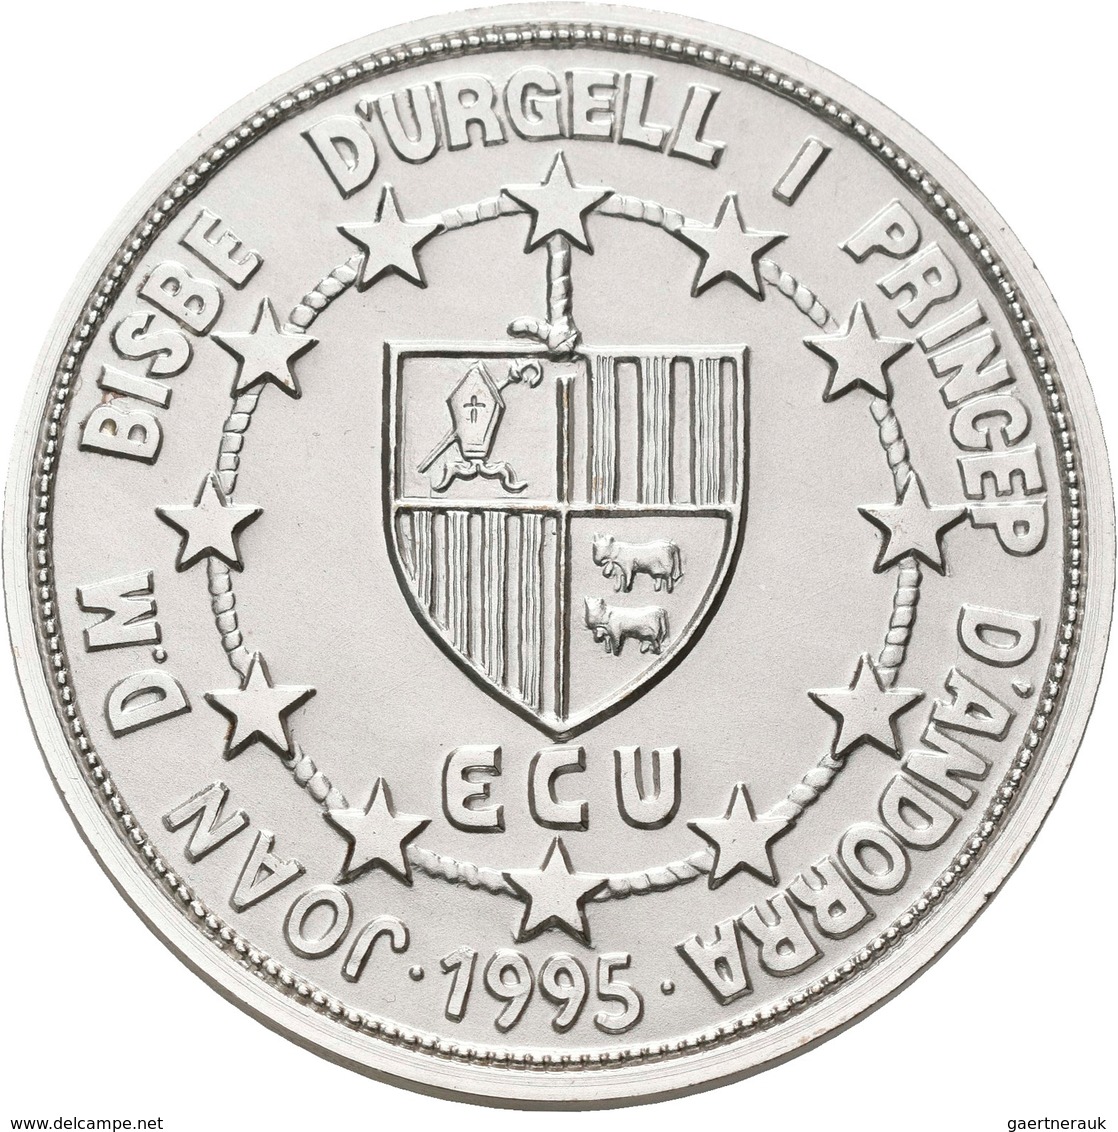 Andorra: Lot 3 Münzen: 20 Diners/ECU 1994 Peter III. Von Catalonien Und Aragon (KM# 100); 20 Diners/ - Andorra